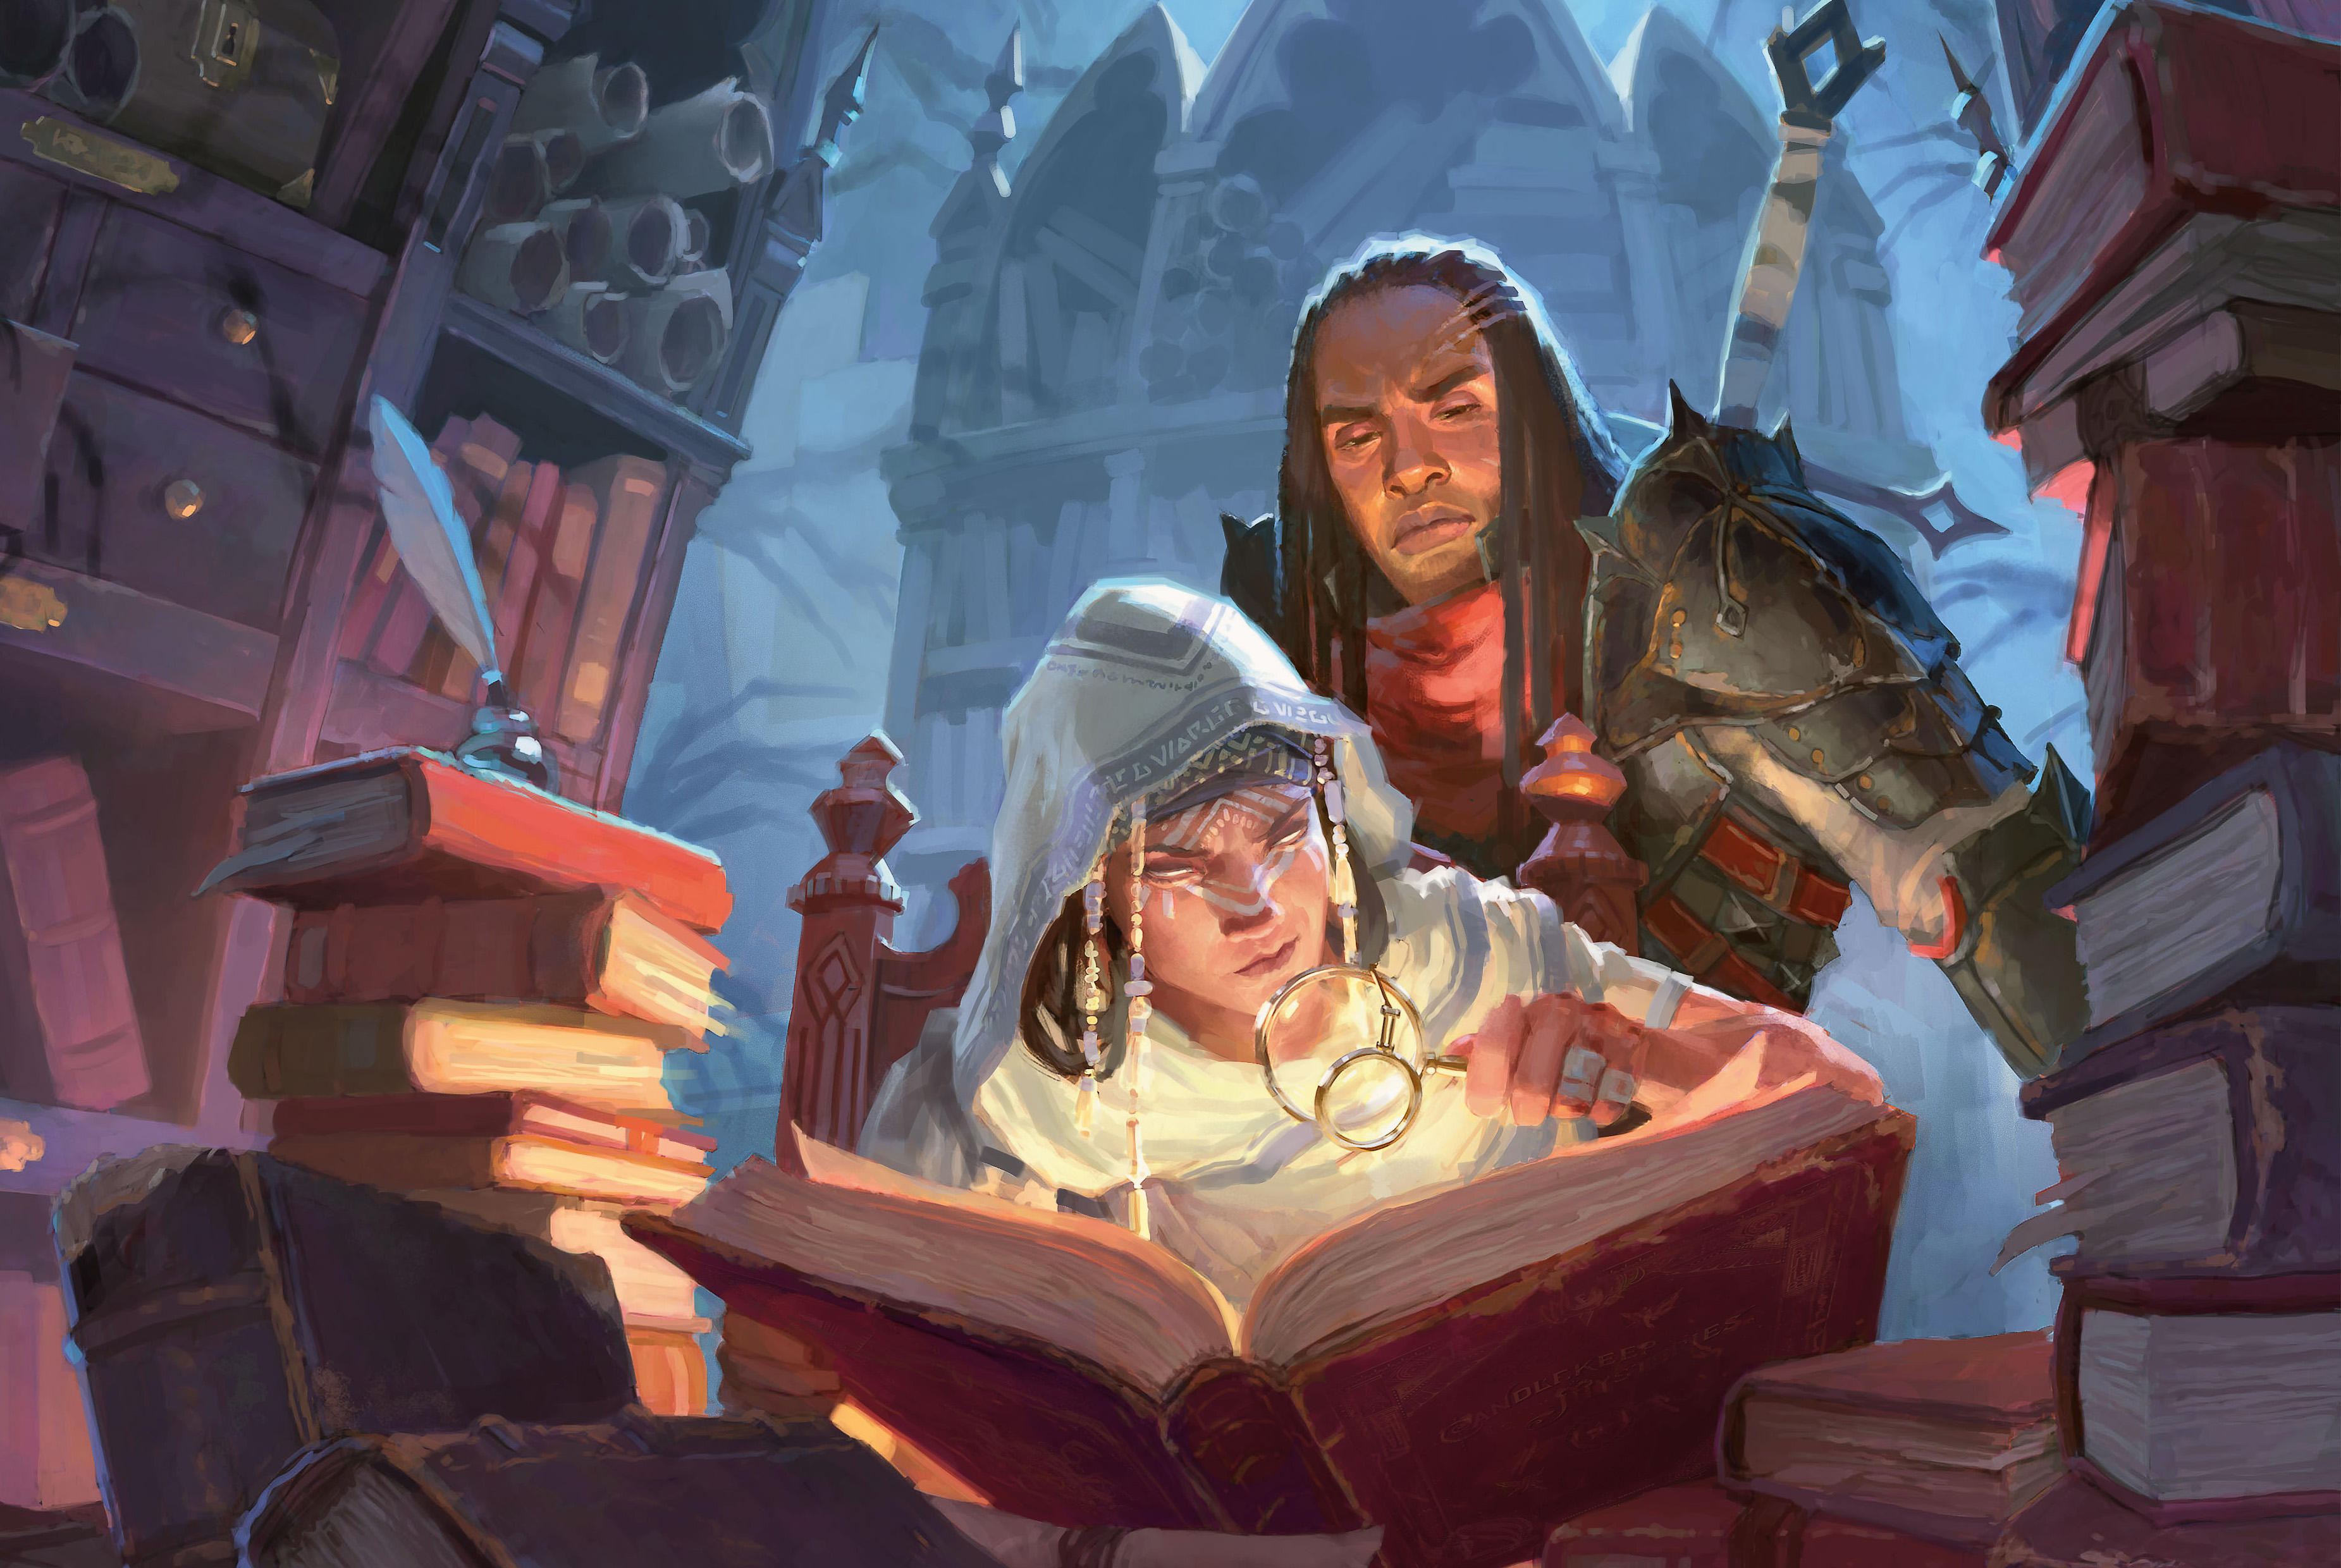 Cover art for Candlekeep Mysteries includes a pair of adventurers perusing forgotten tomes deep beneath Baldur’s Gate.